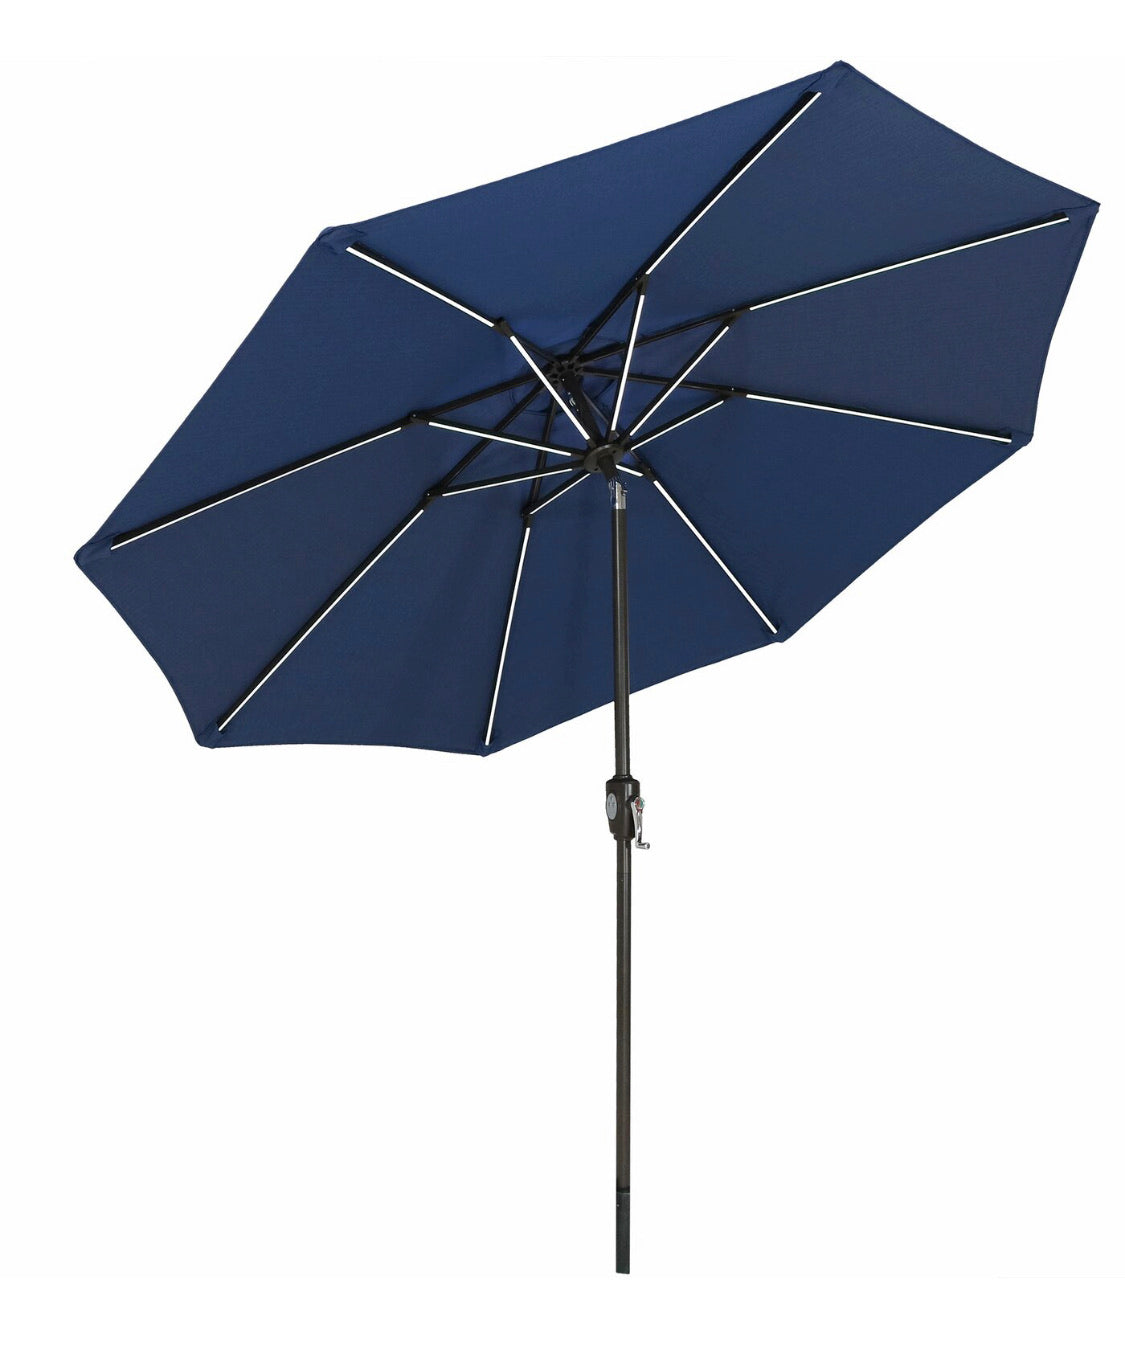 Caleb 8.5' Market Umbrella with solar LED light bars-Navy #3034